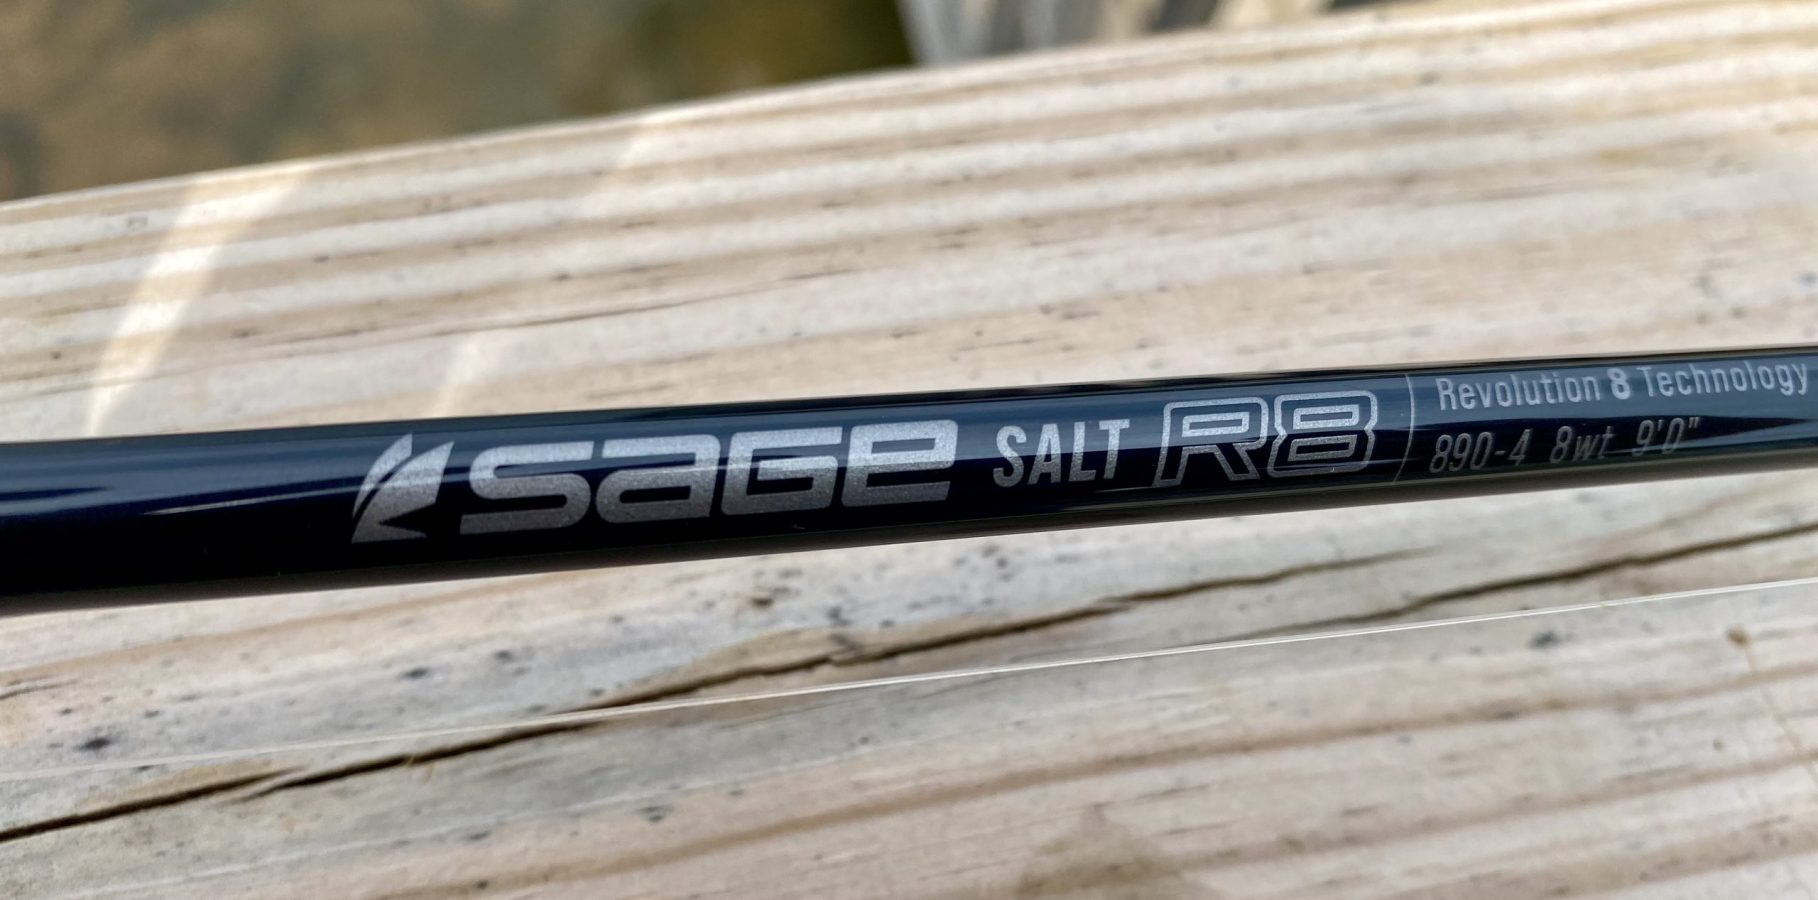 Saltwater fly rod review - Sage Salt R8 Fly Rod